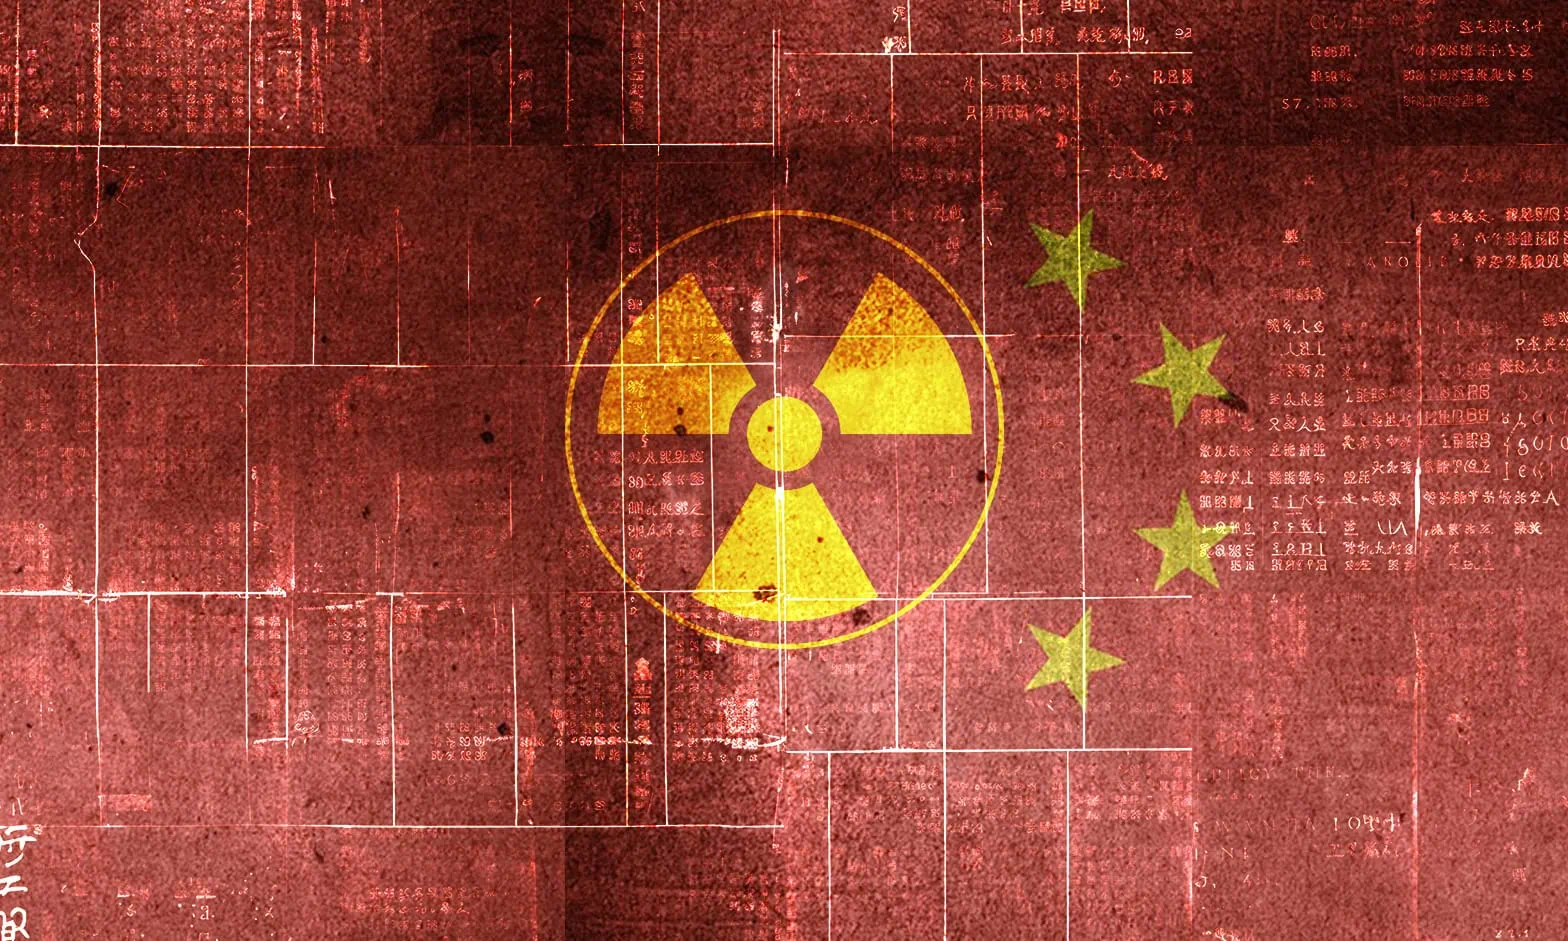 Article Header Design: “The Future of Uranium Demand – China’s Surge”